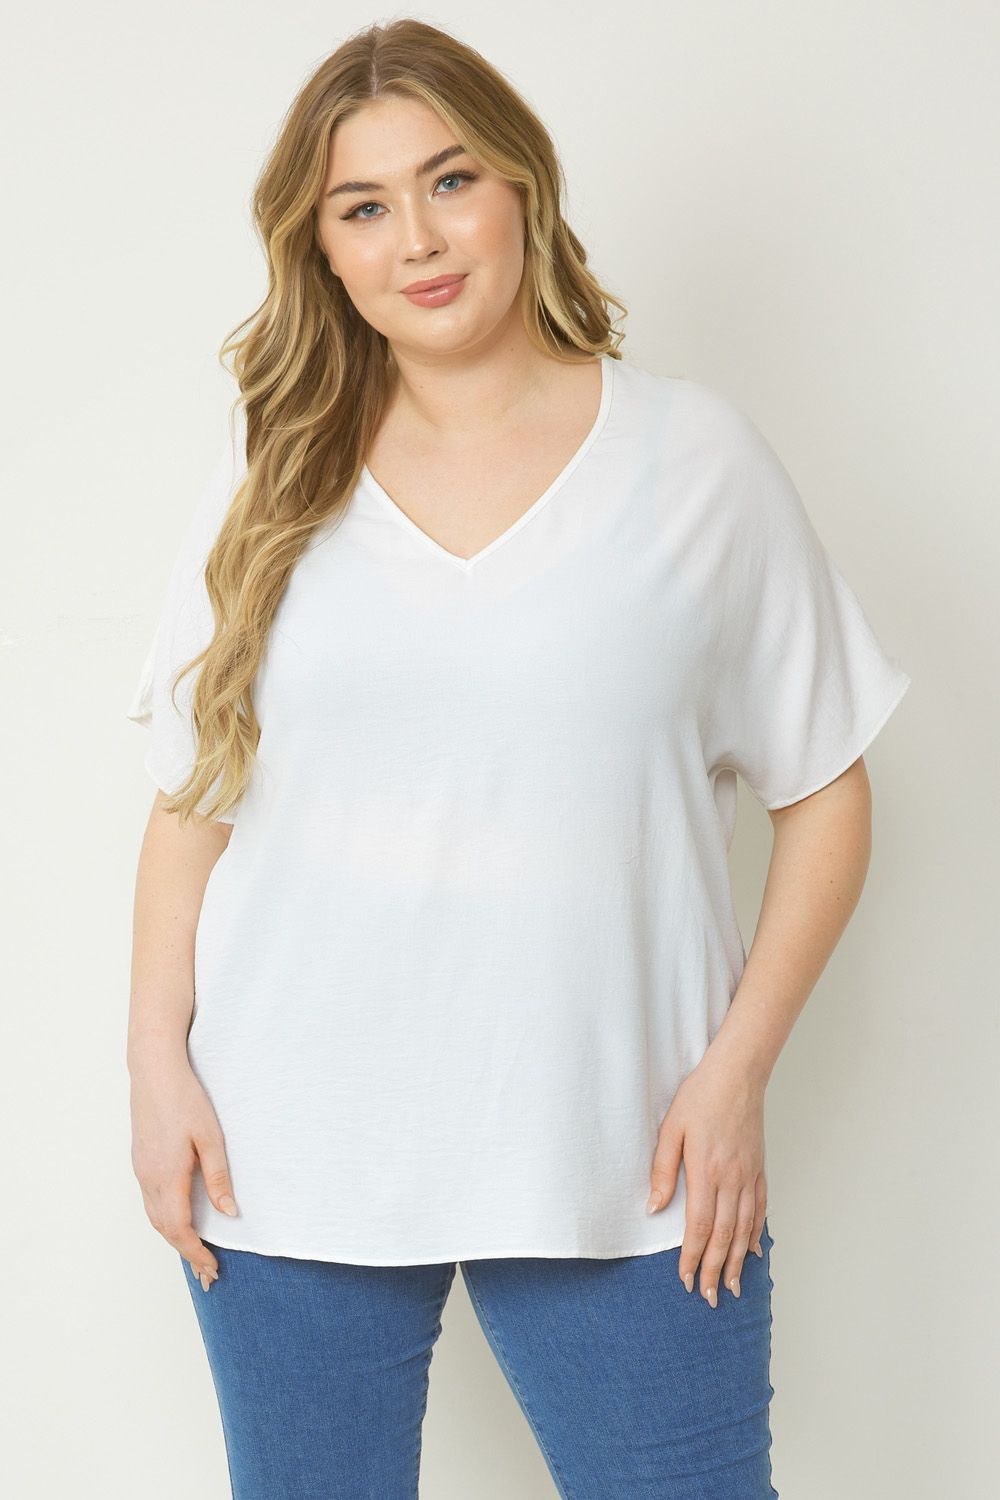 Women's white basic v-neck shirt.